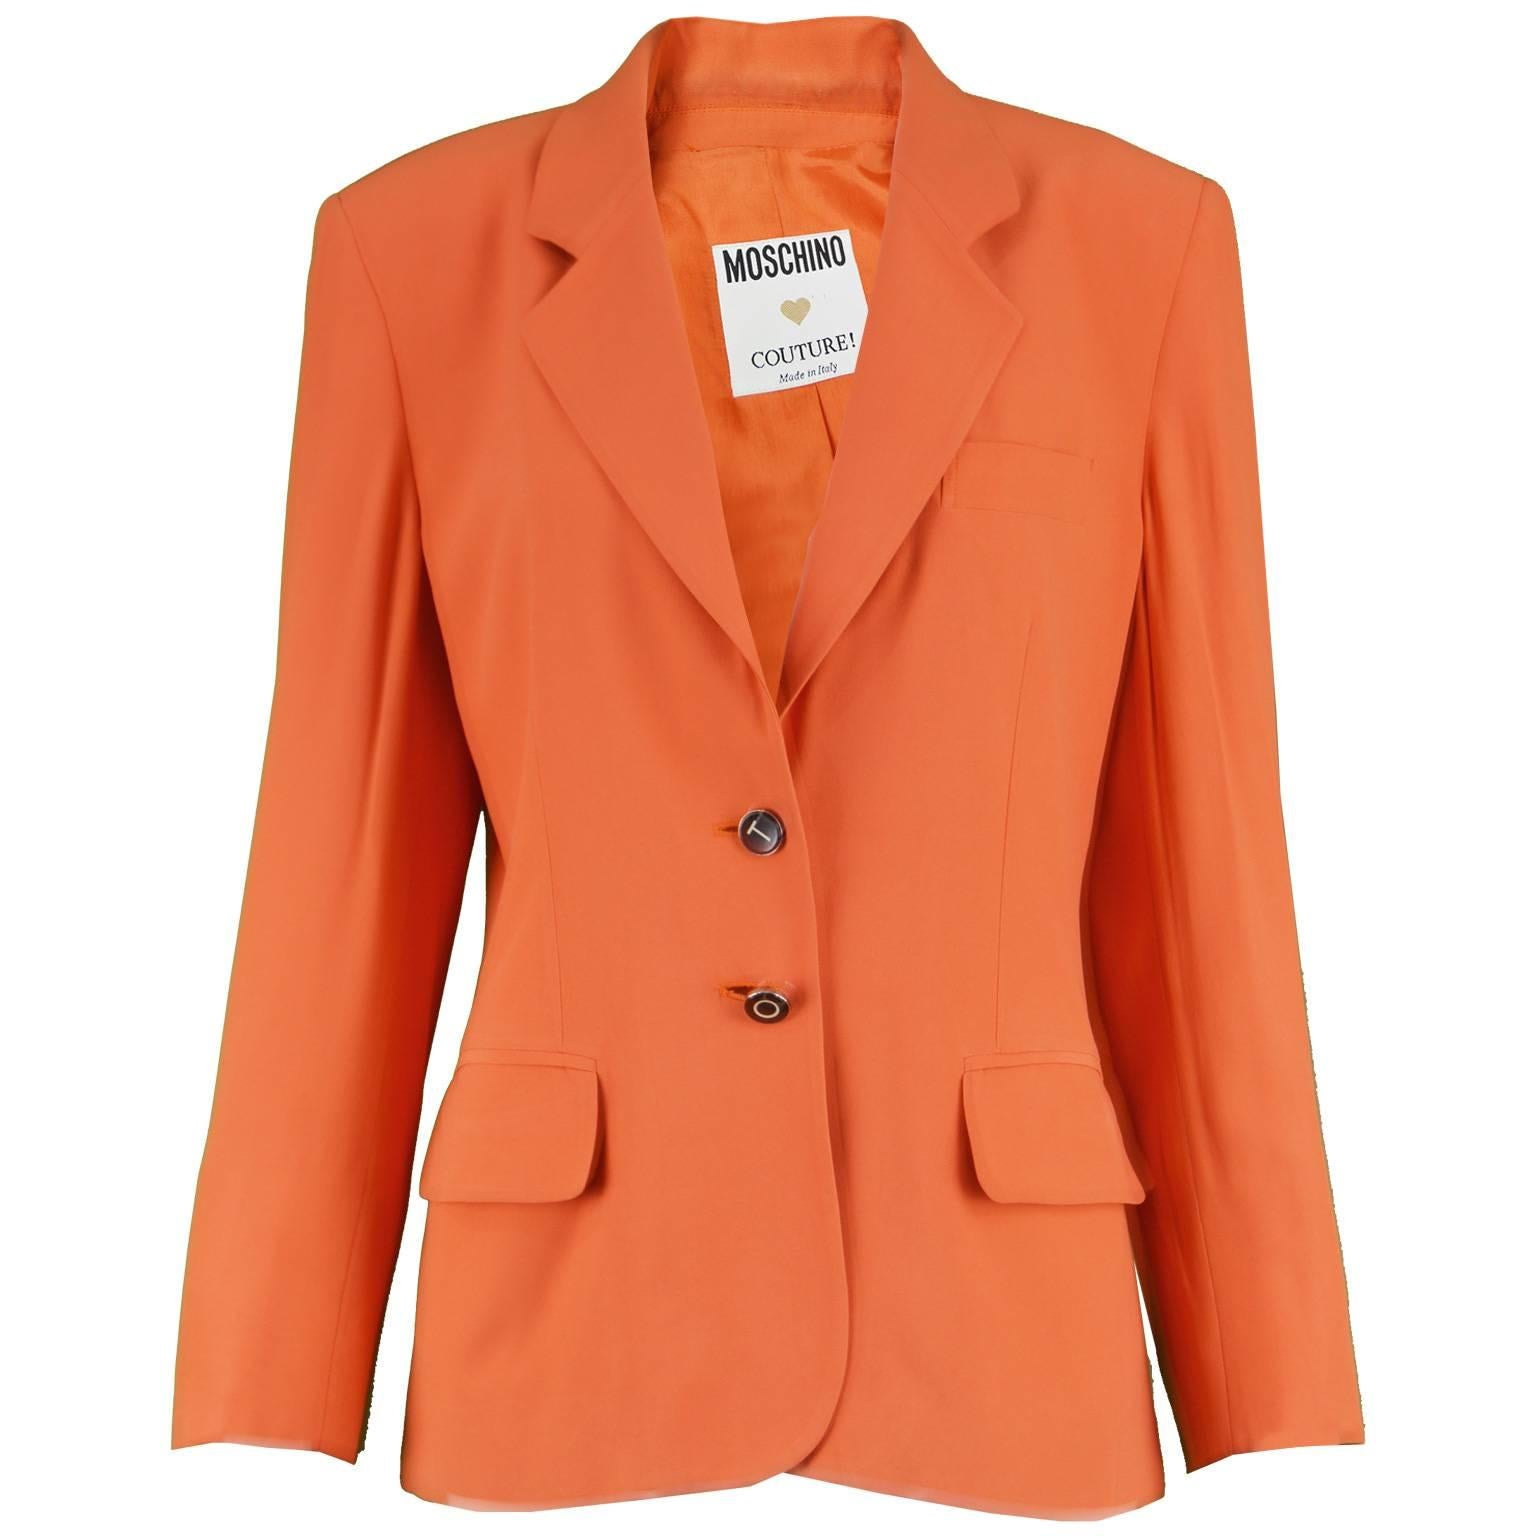 Moschino Couture Vintage "Born to Shop" Orange Women's Blazer Jacket, 1990s 